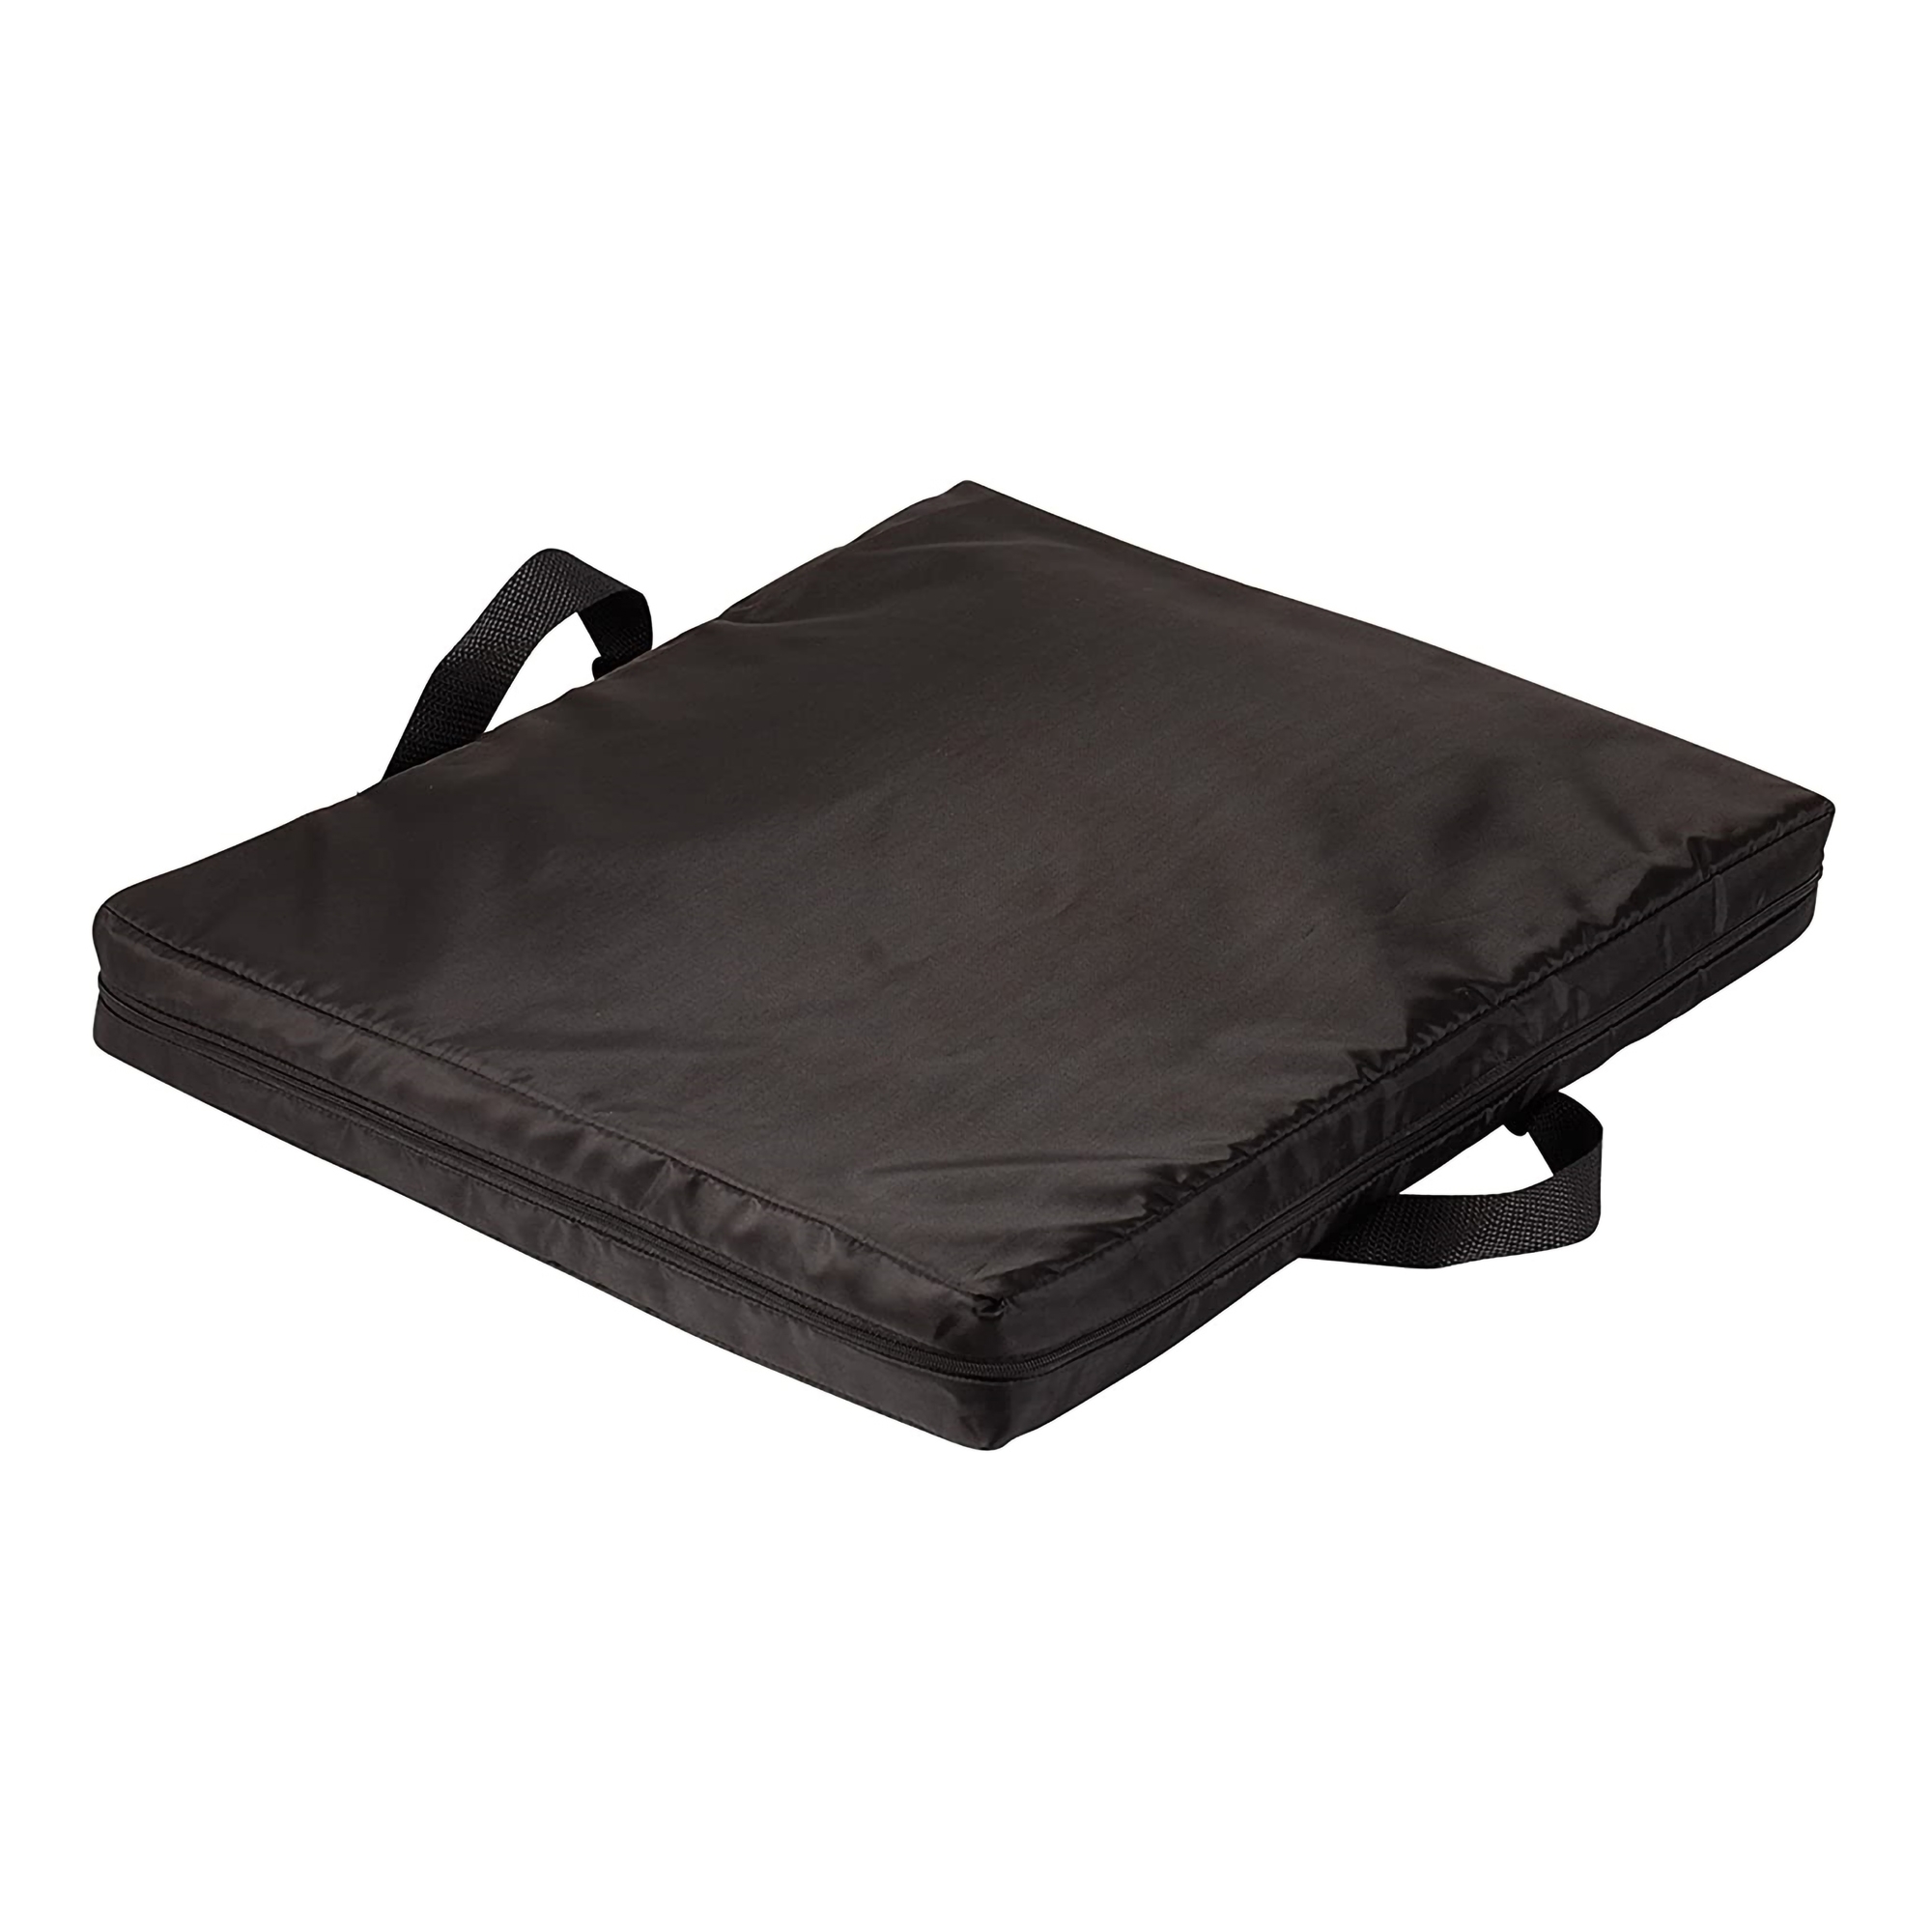 DMI Seat Cushion Black Foam / Gel Mobility Accessories 513-7645-0200 - 1 Ct - image 5 of 5